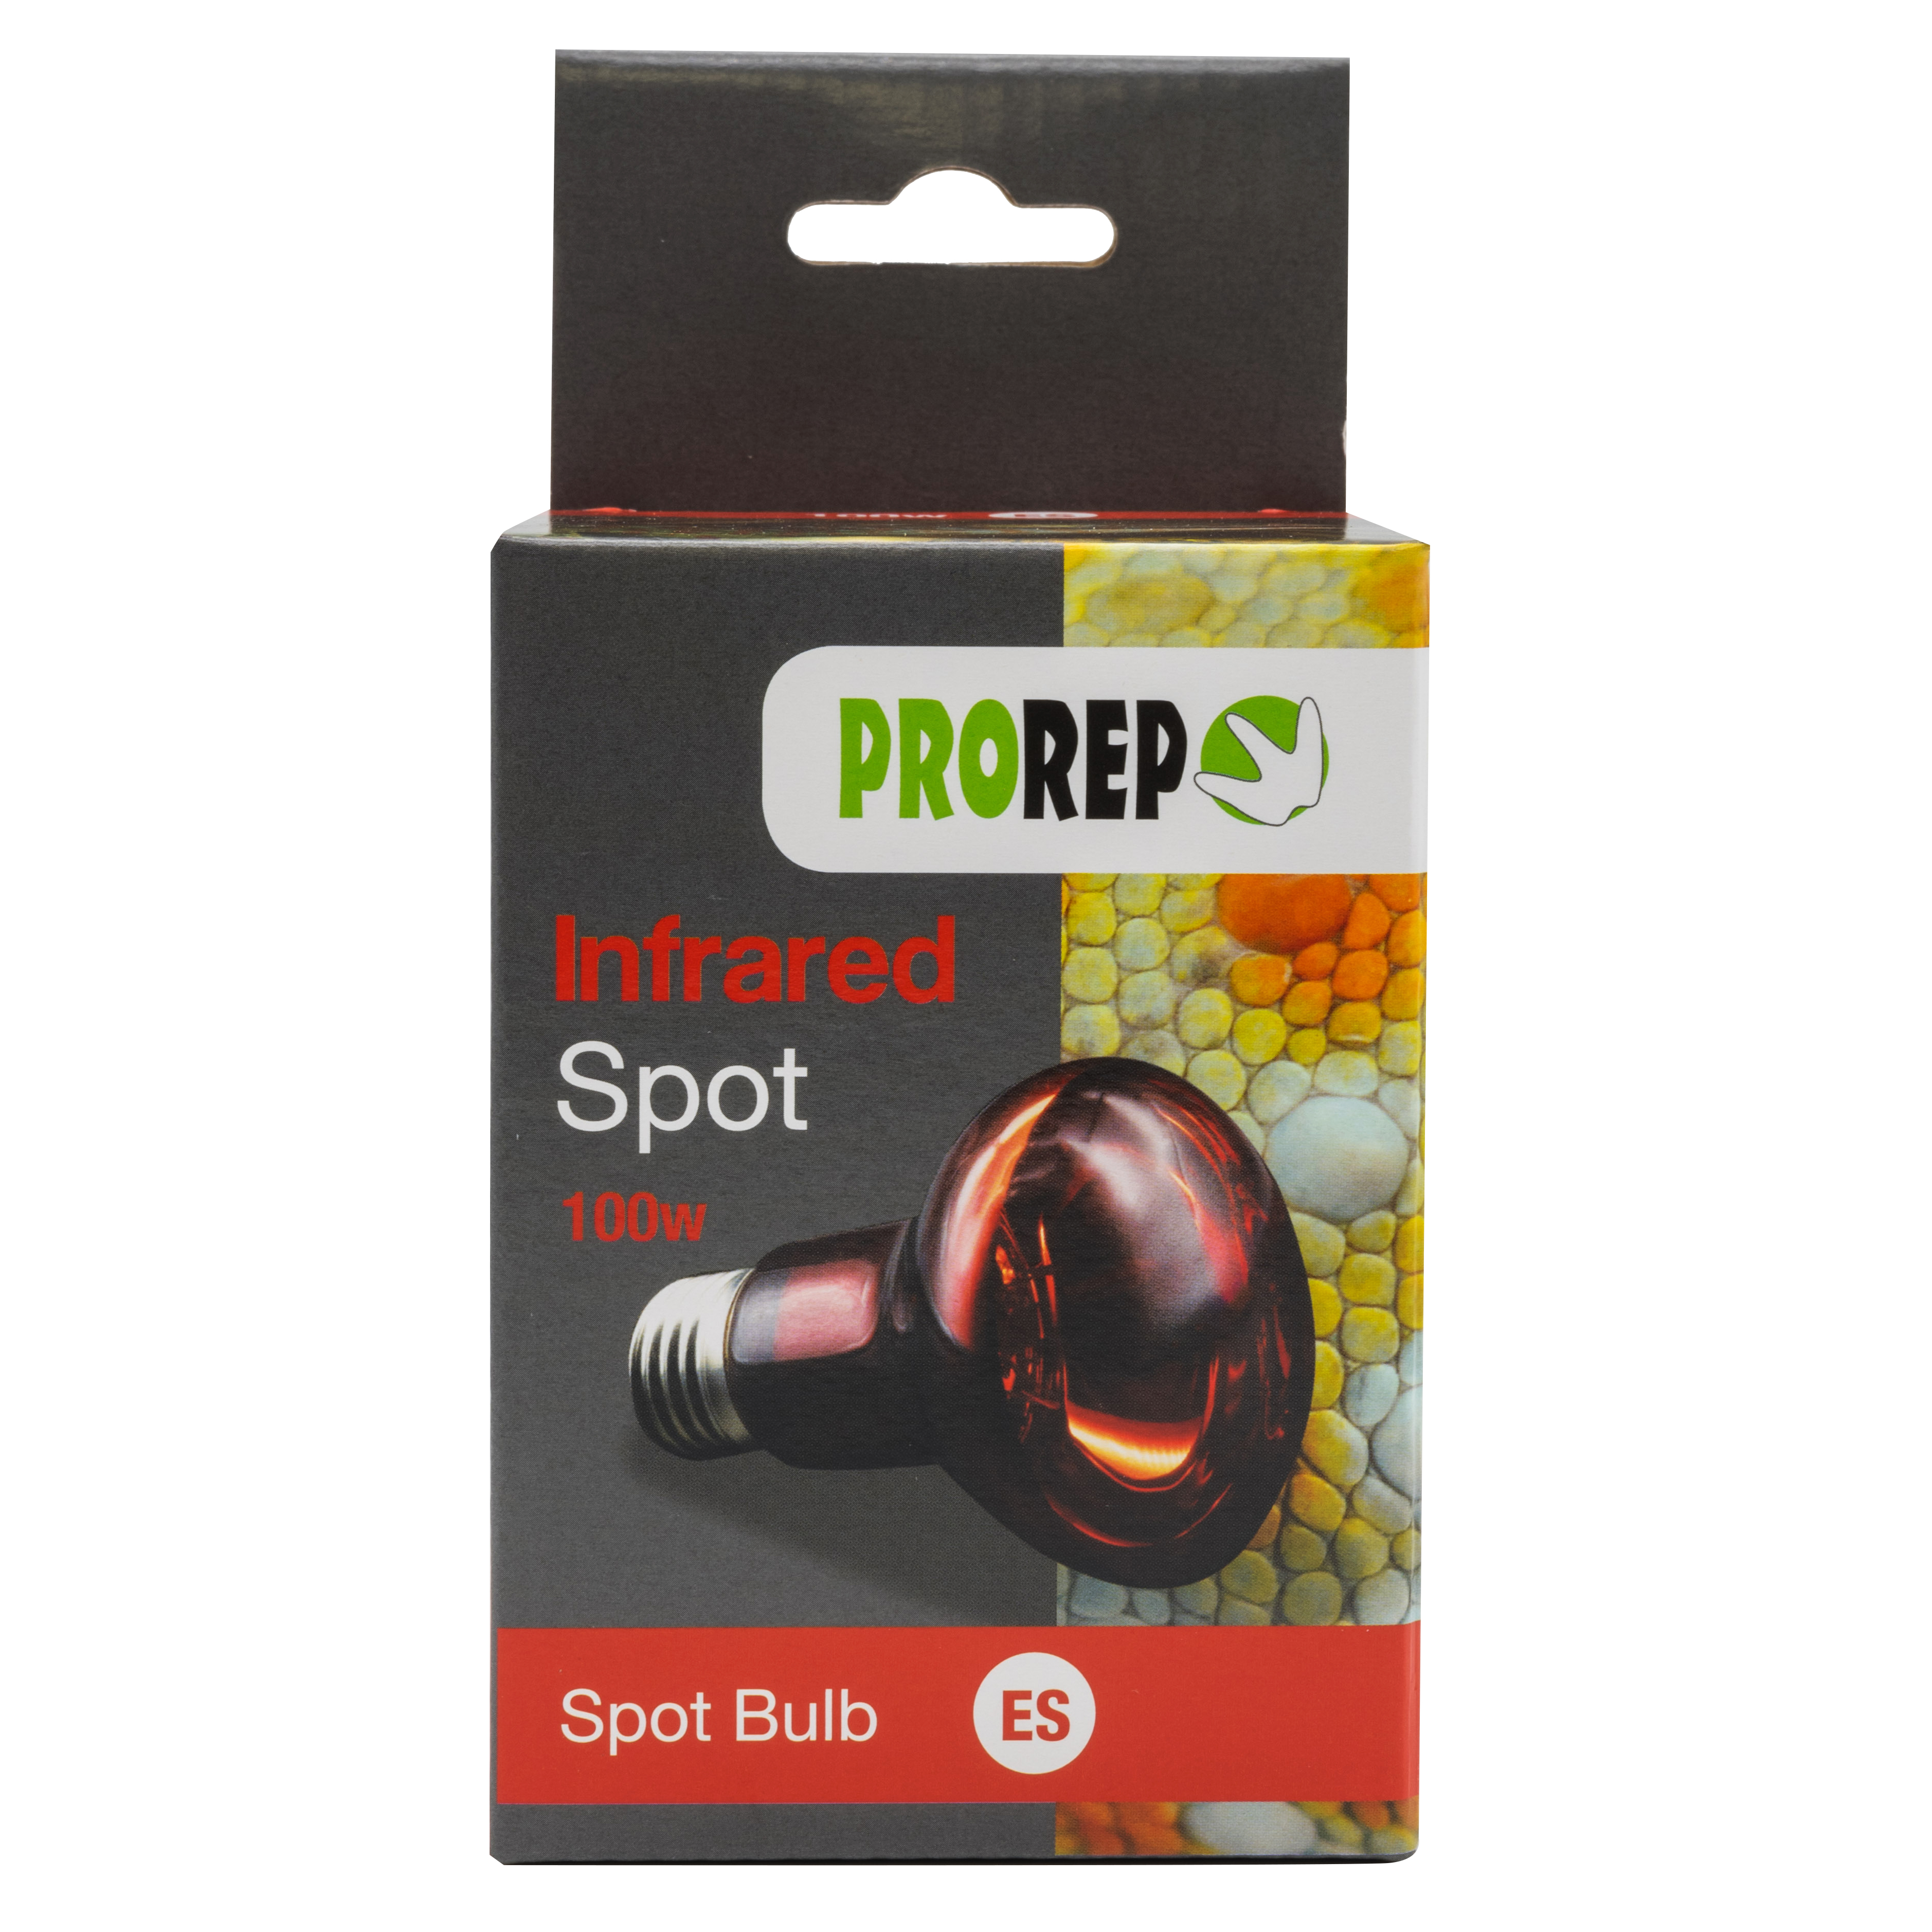 ProRep Infrared Spot Lamp 100w ES